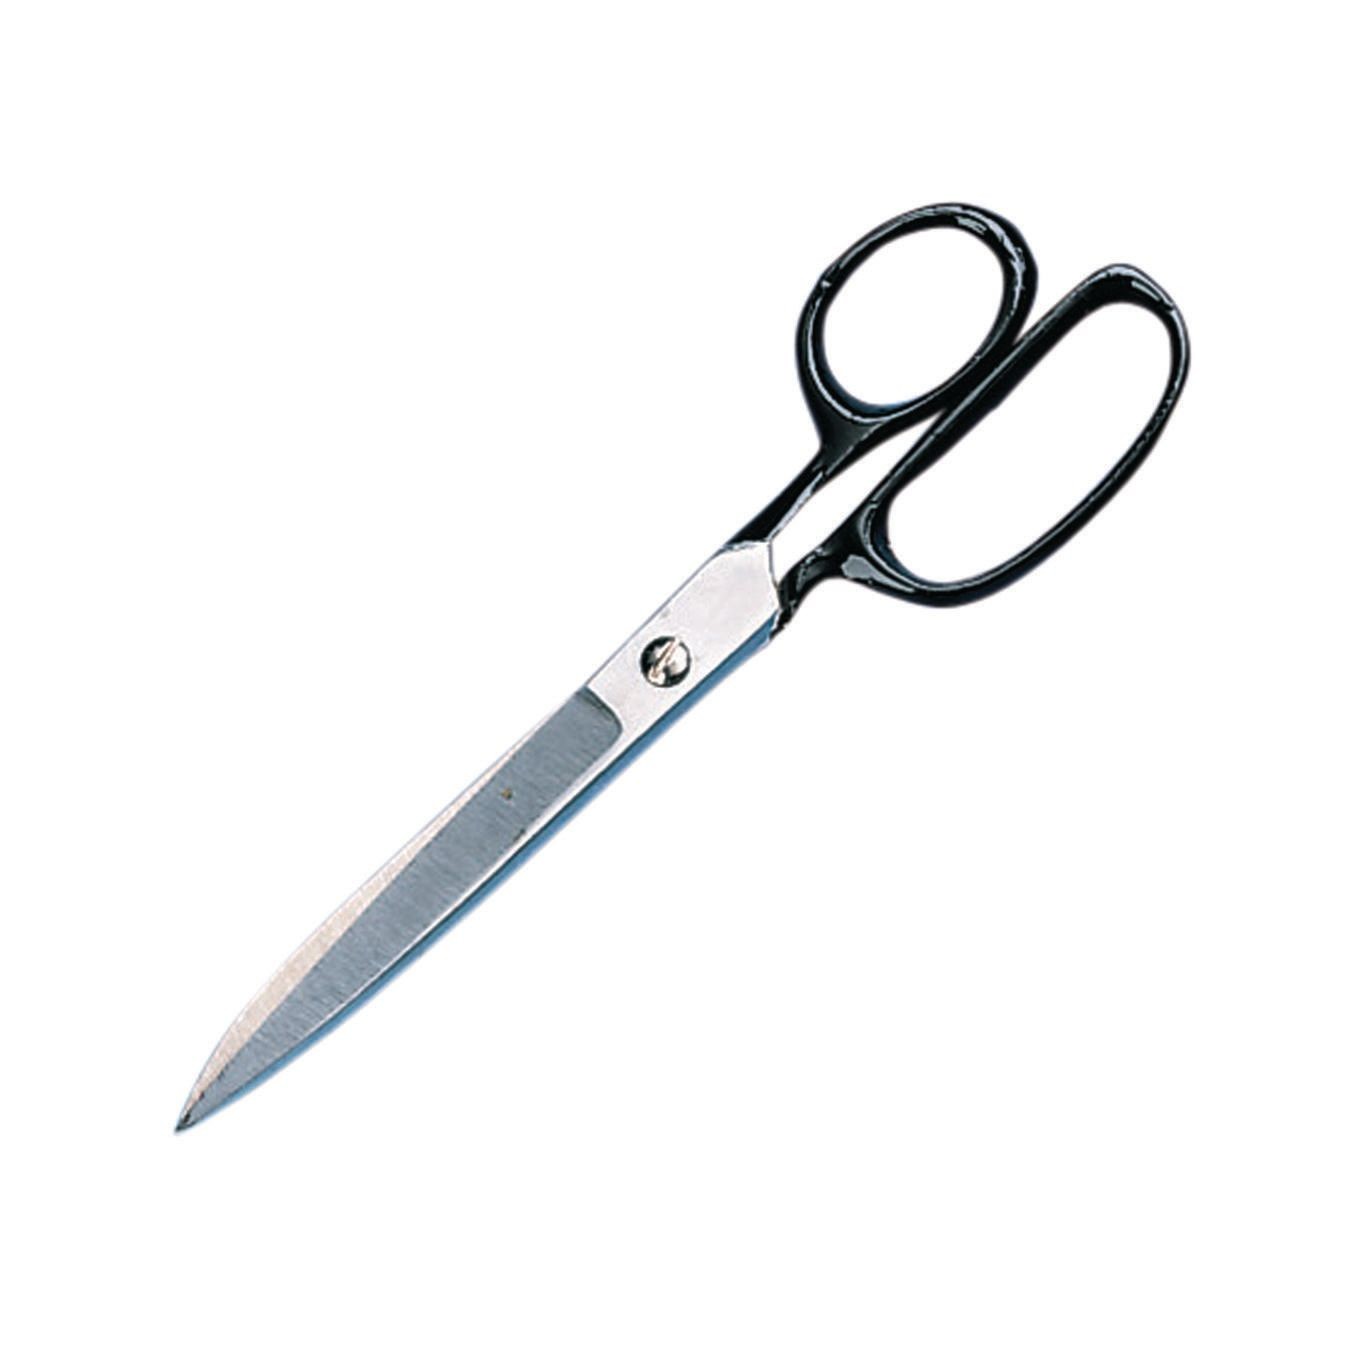 S & E Teacher's Edition 8.5 inch Scissors 16pcs, Stainless Steel Sharp Blade, Comfort-Grip Handles, Pack of 16.